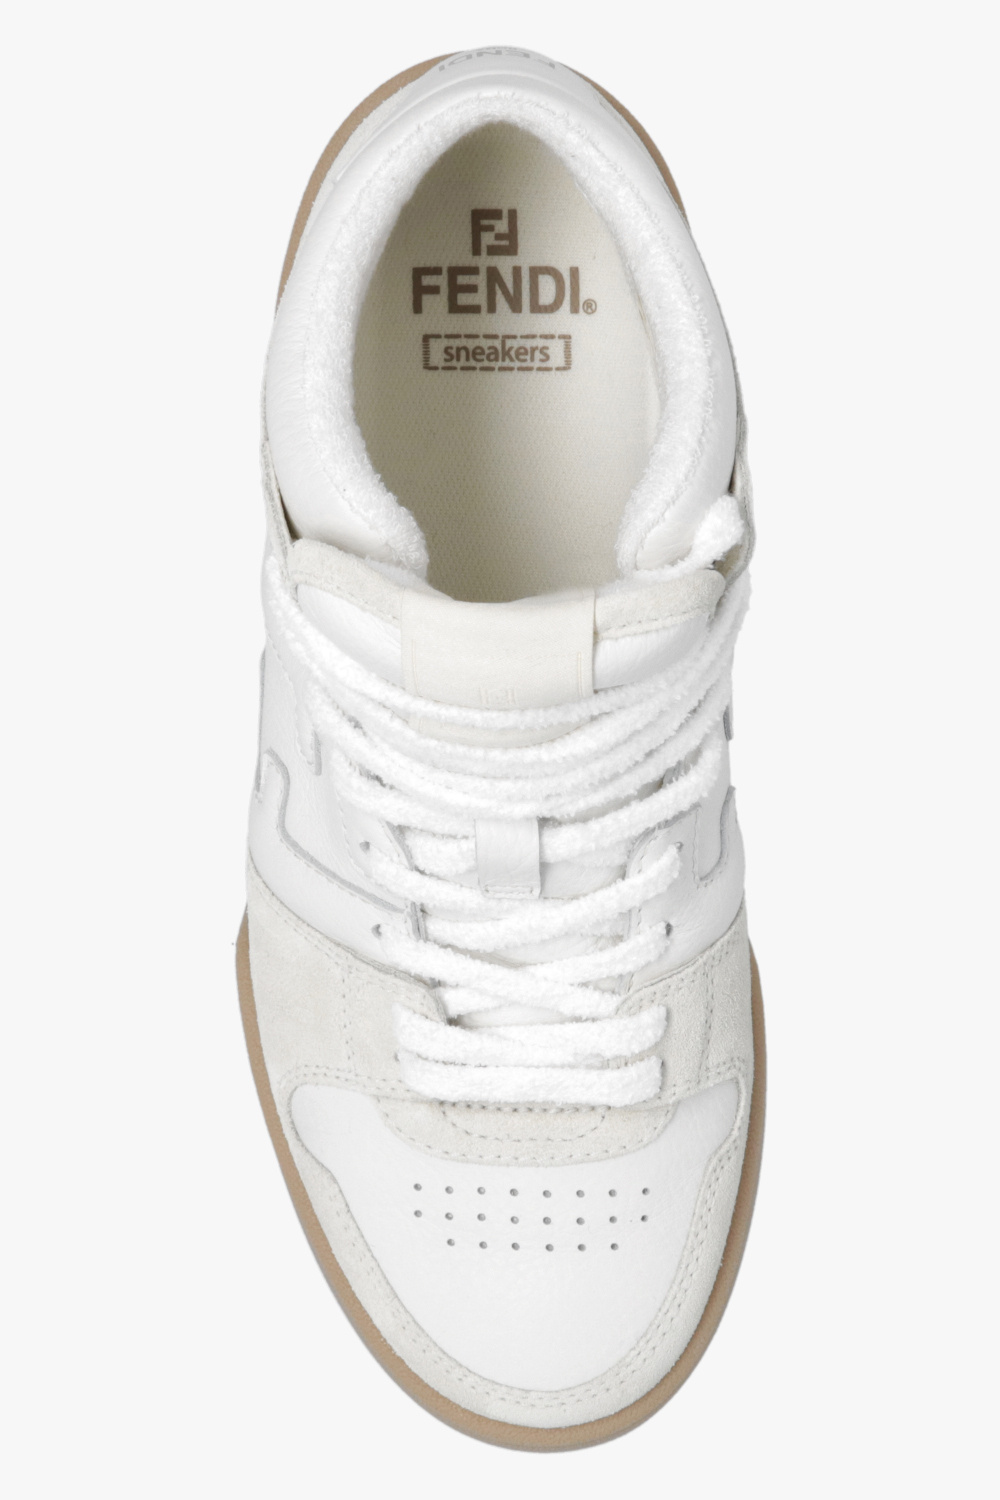 Fendi ‘Match’ high-top sneakers